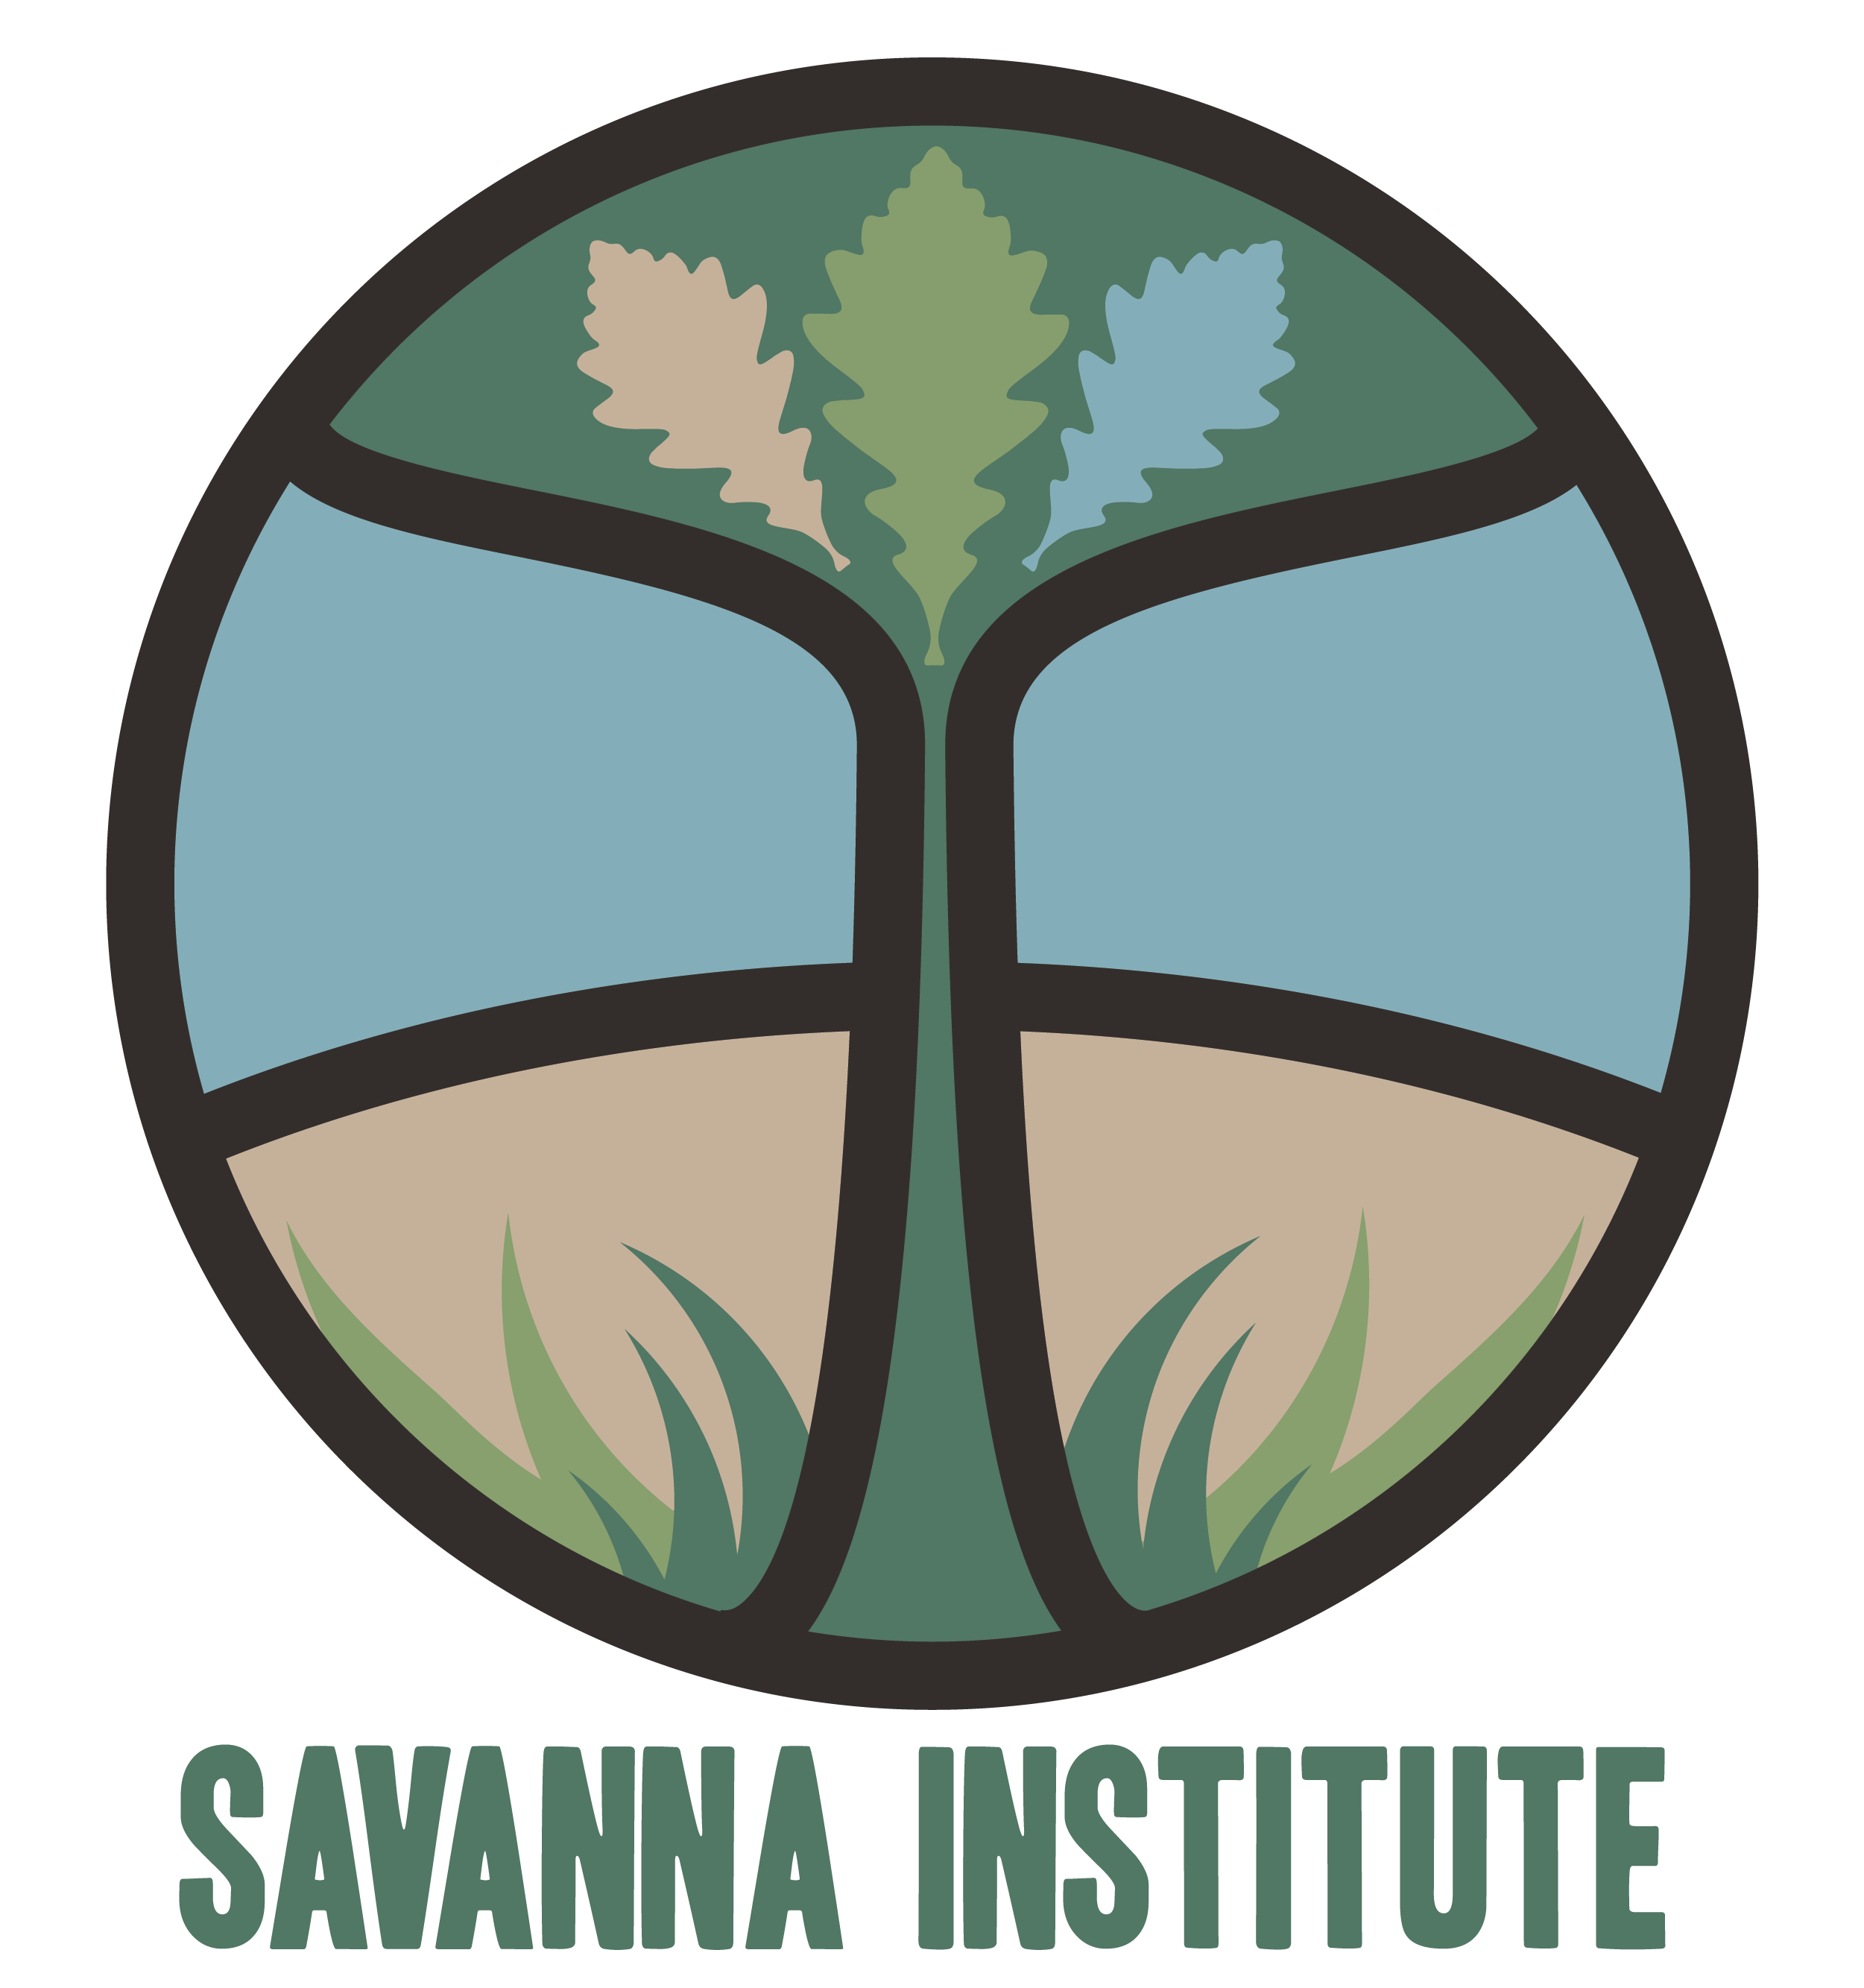 Savanna Institute: Director of Research